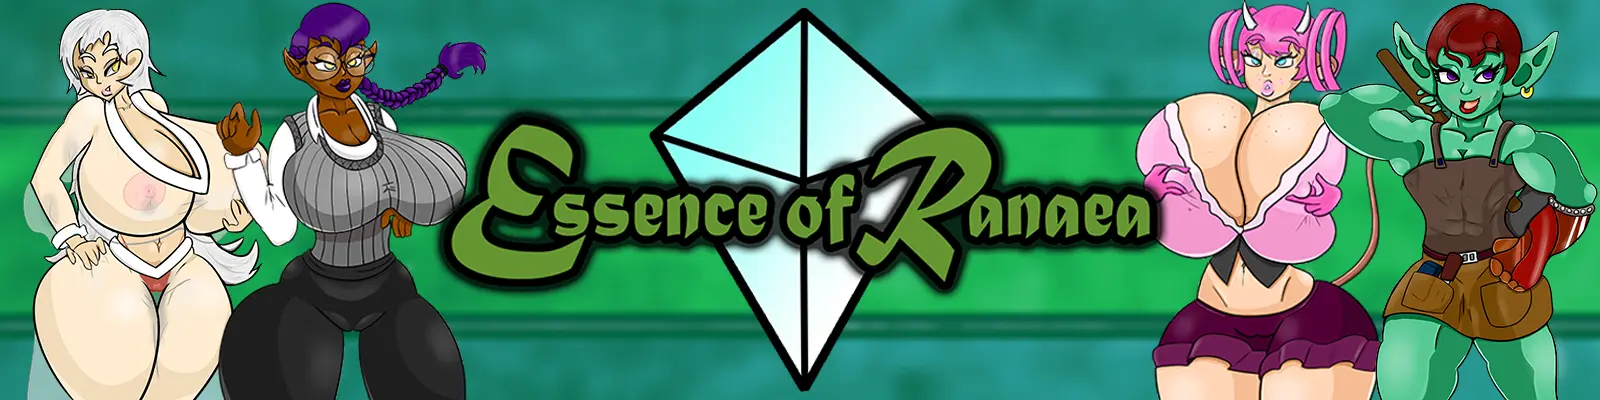 Essence of Ranaea [v0.0.1] main image